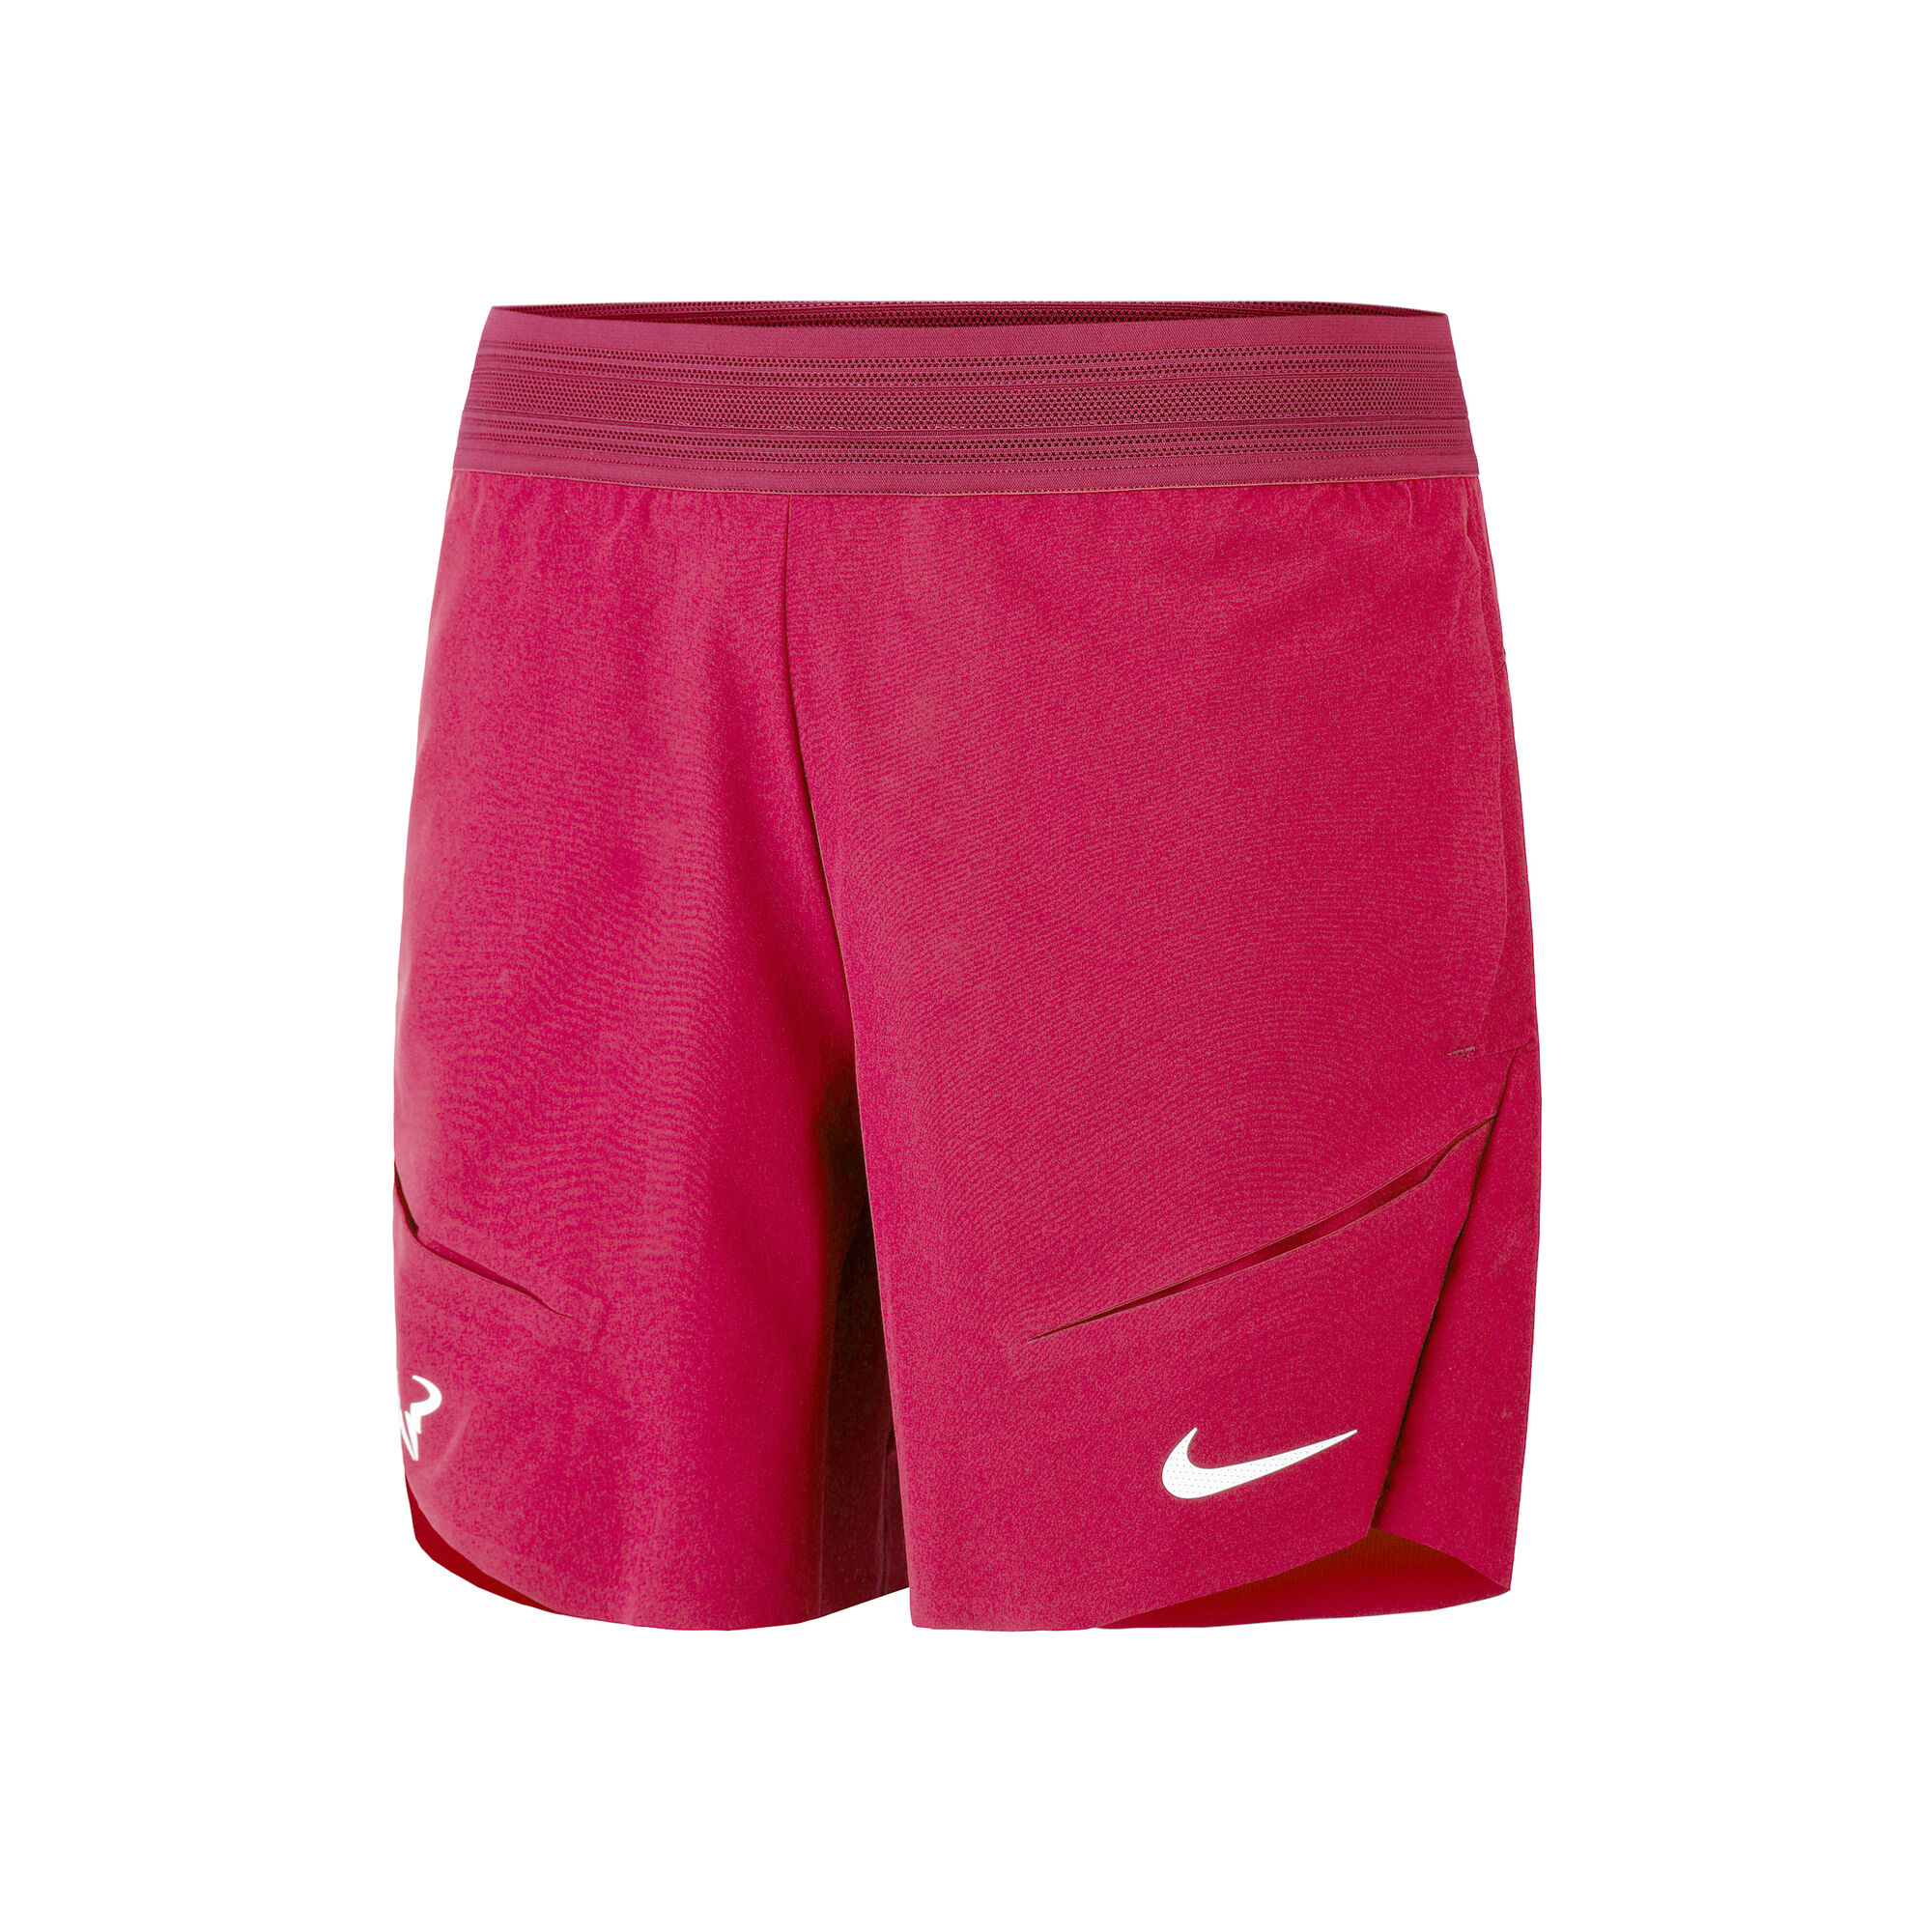 Nike Advantage Rafa 7in Shorts Hombres - Berry online |